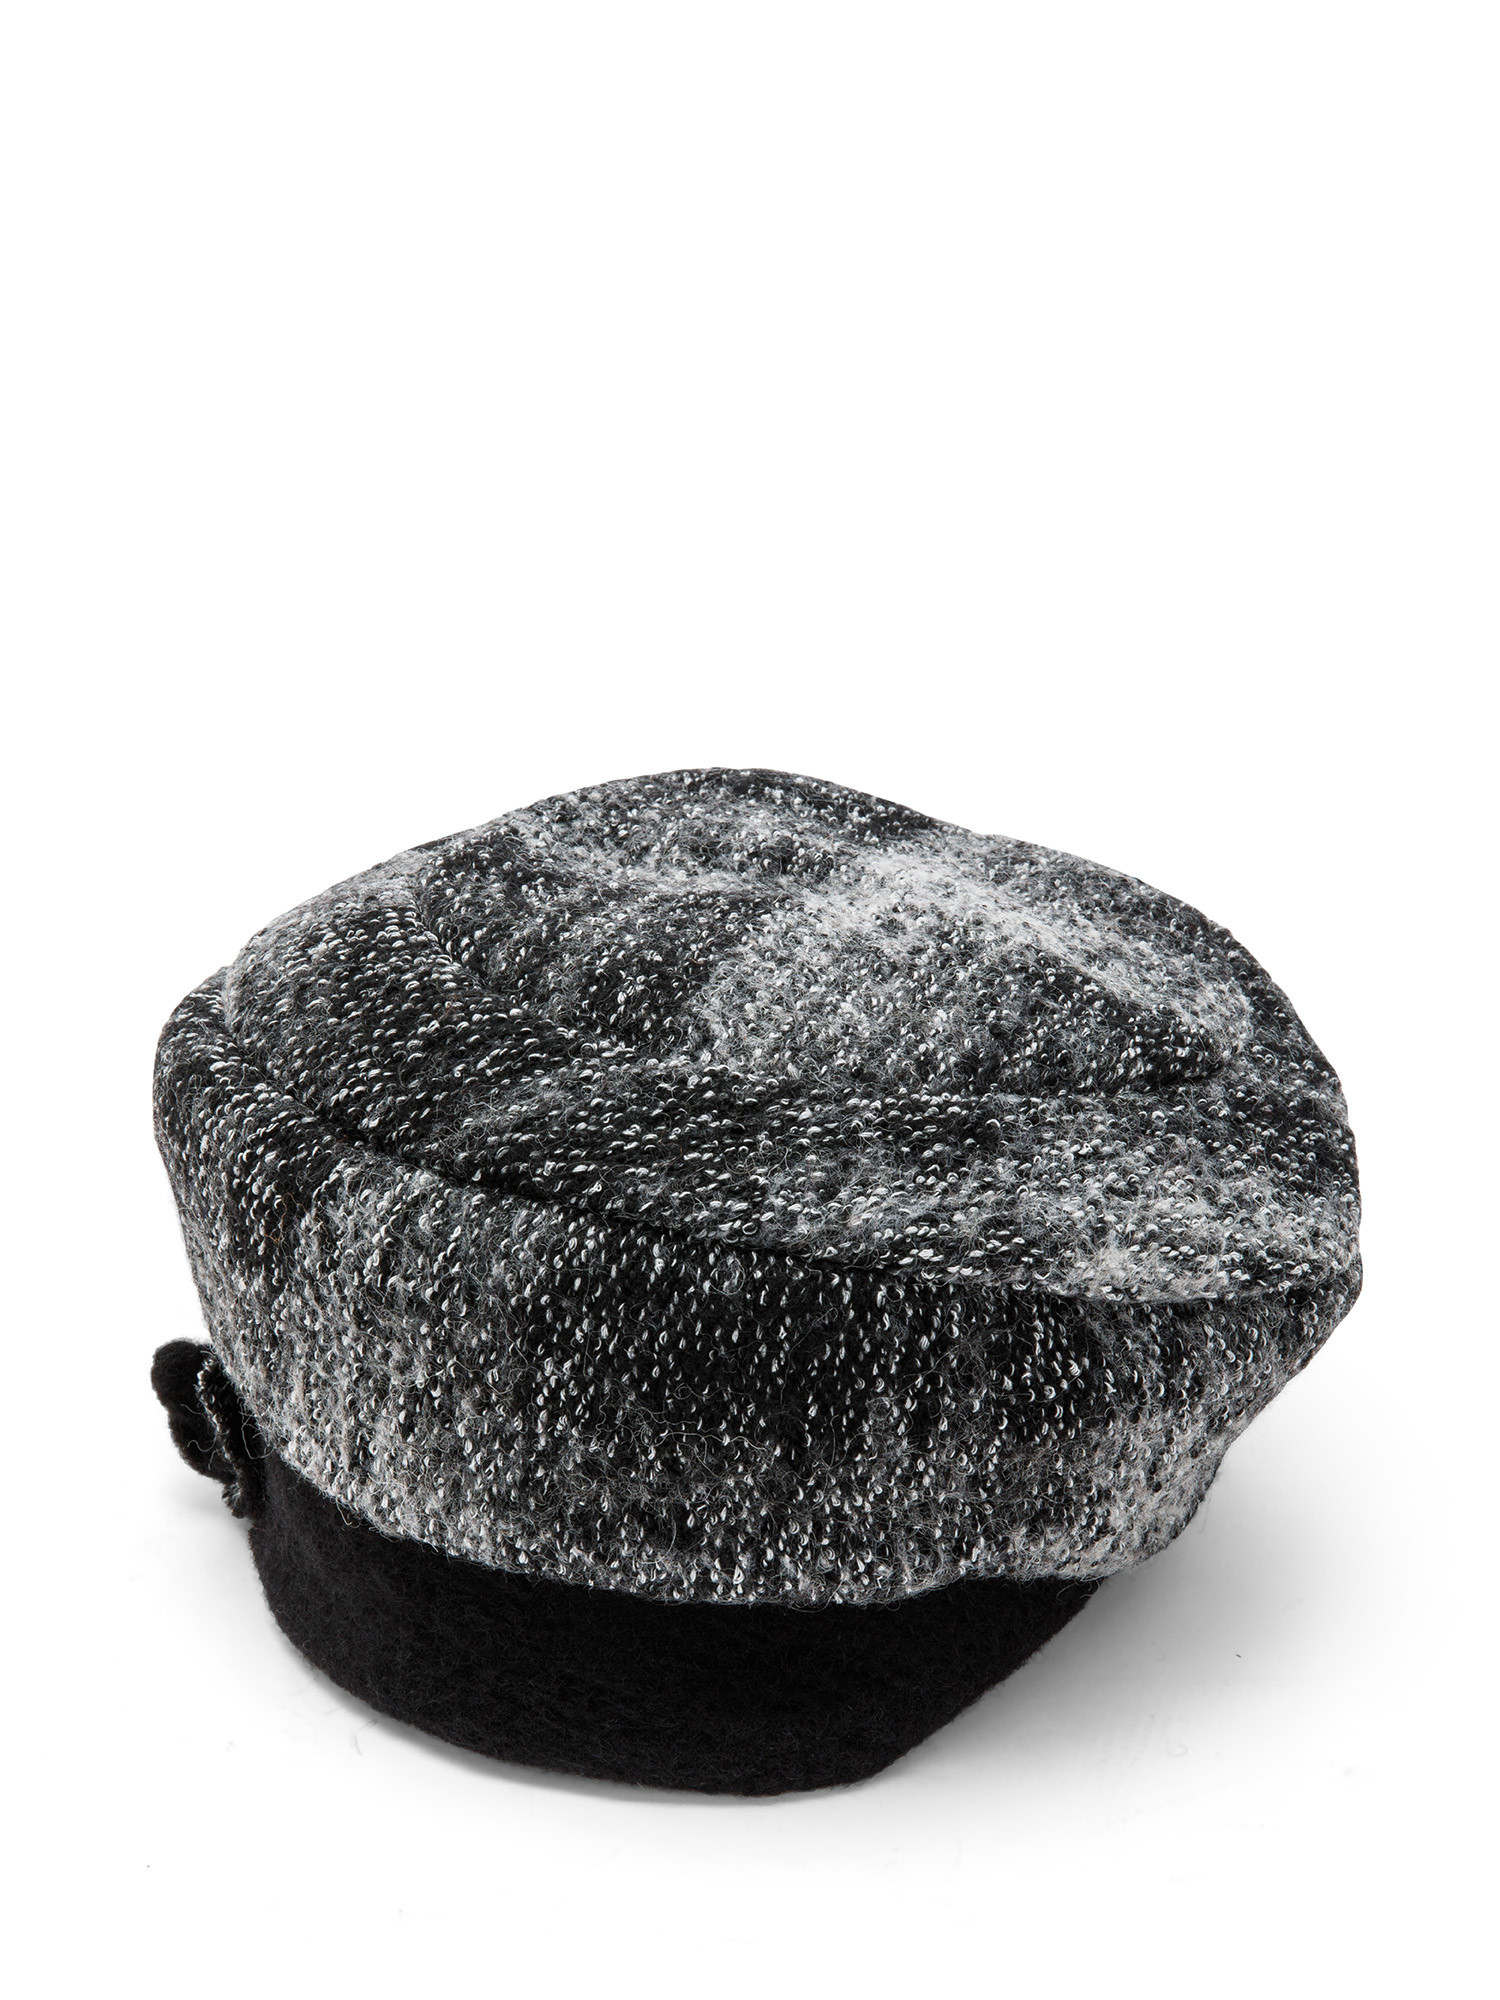 Koan - Scottish beret with application, Black, large image number 0